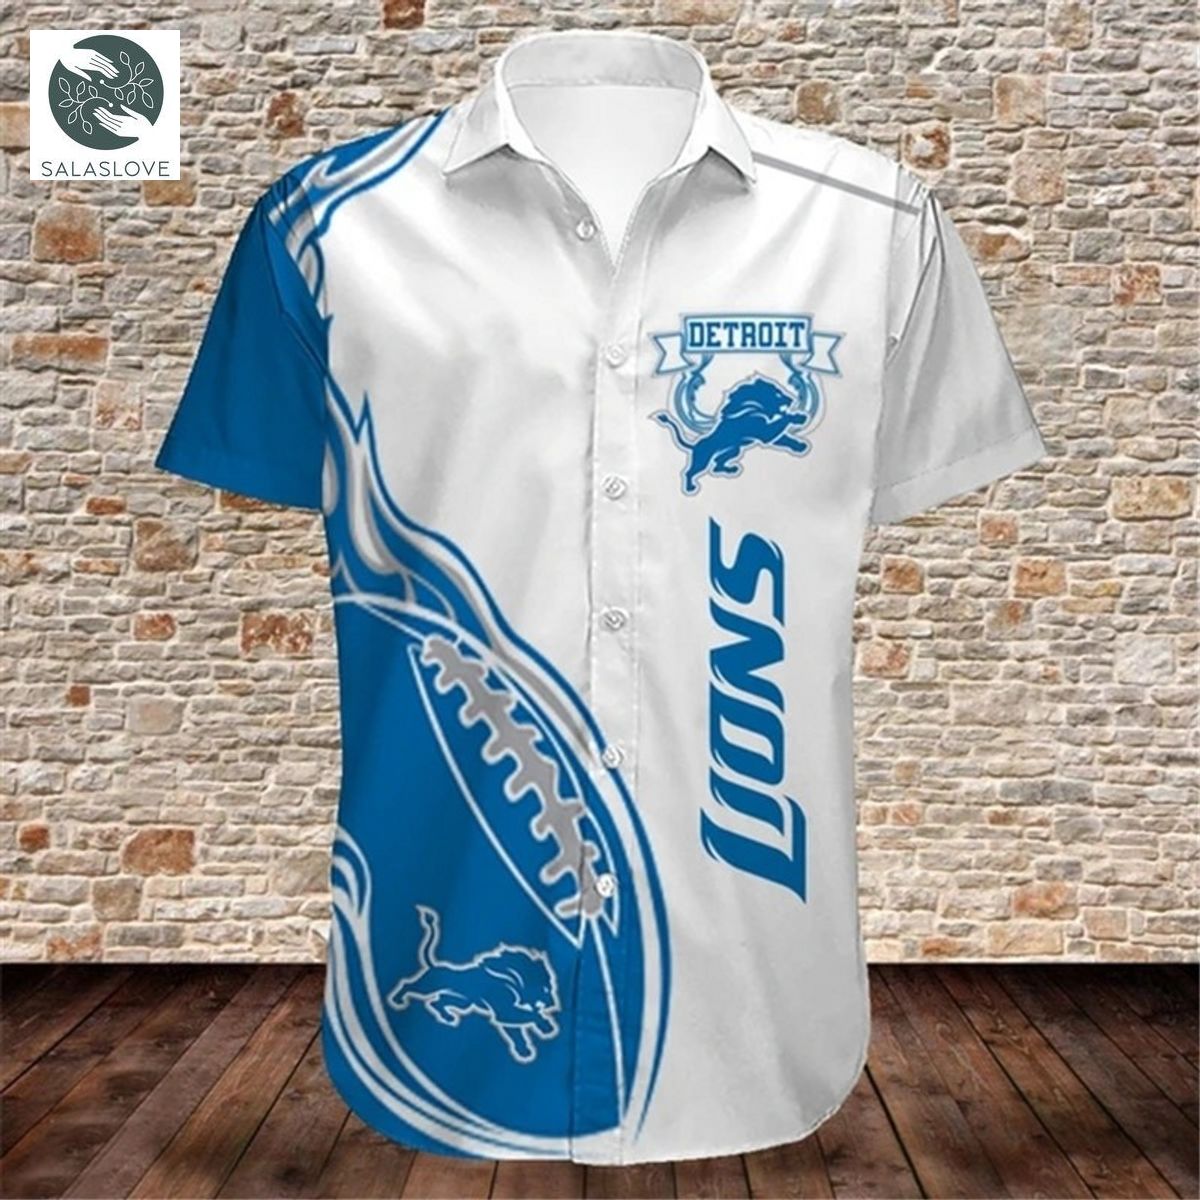 Detroit Lions Shirts Cute Flame Balls graphic gift for men